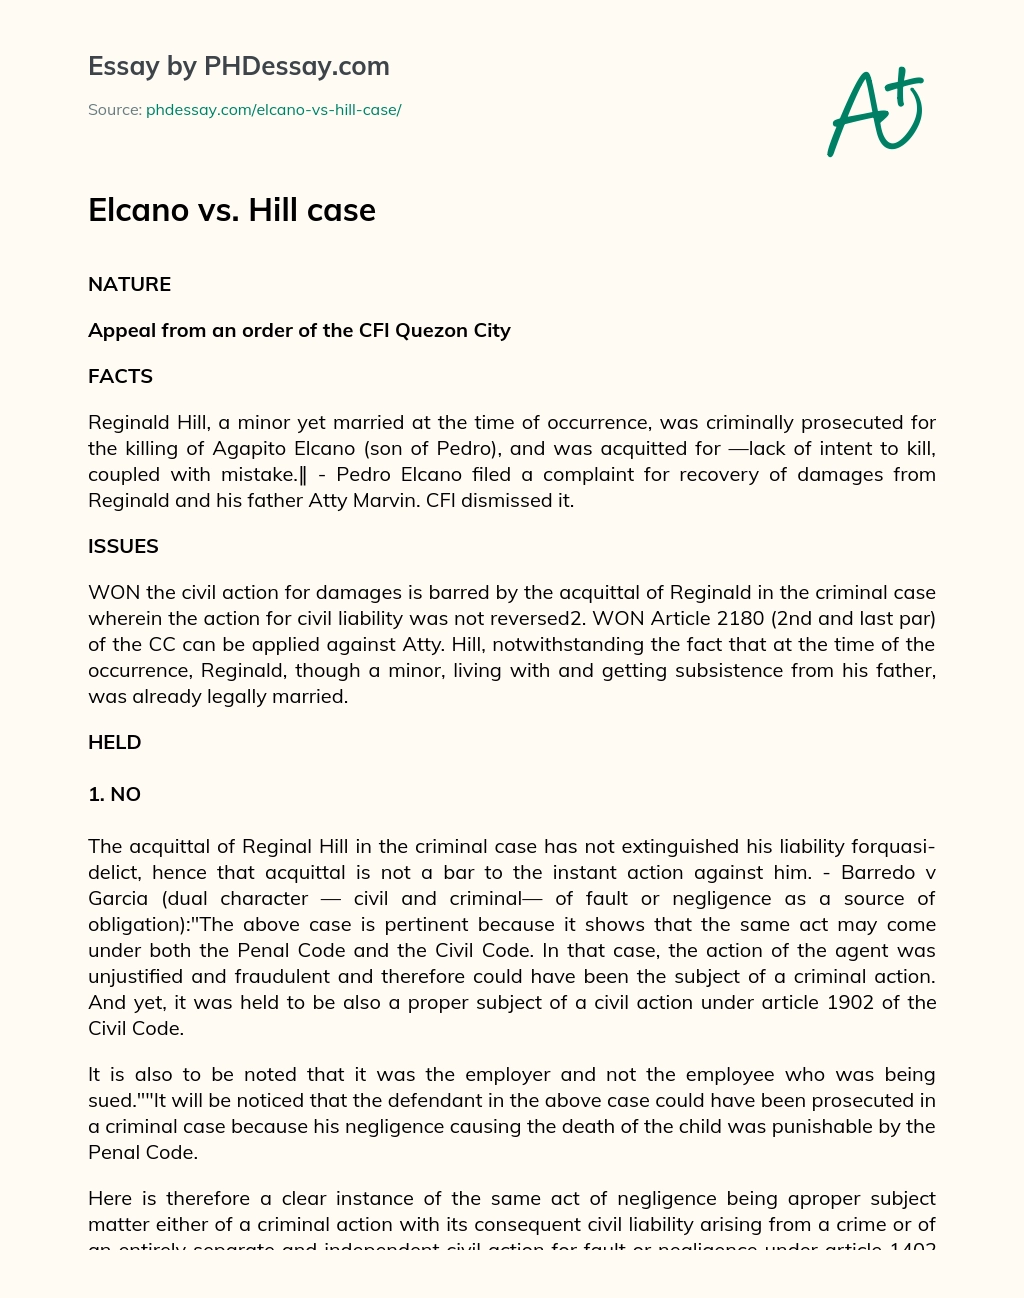 Elcano vs. Hill case essay